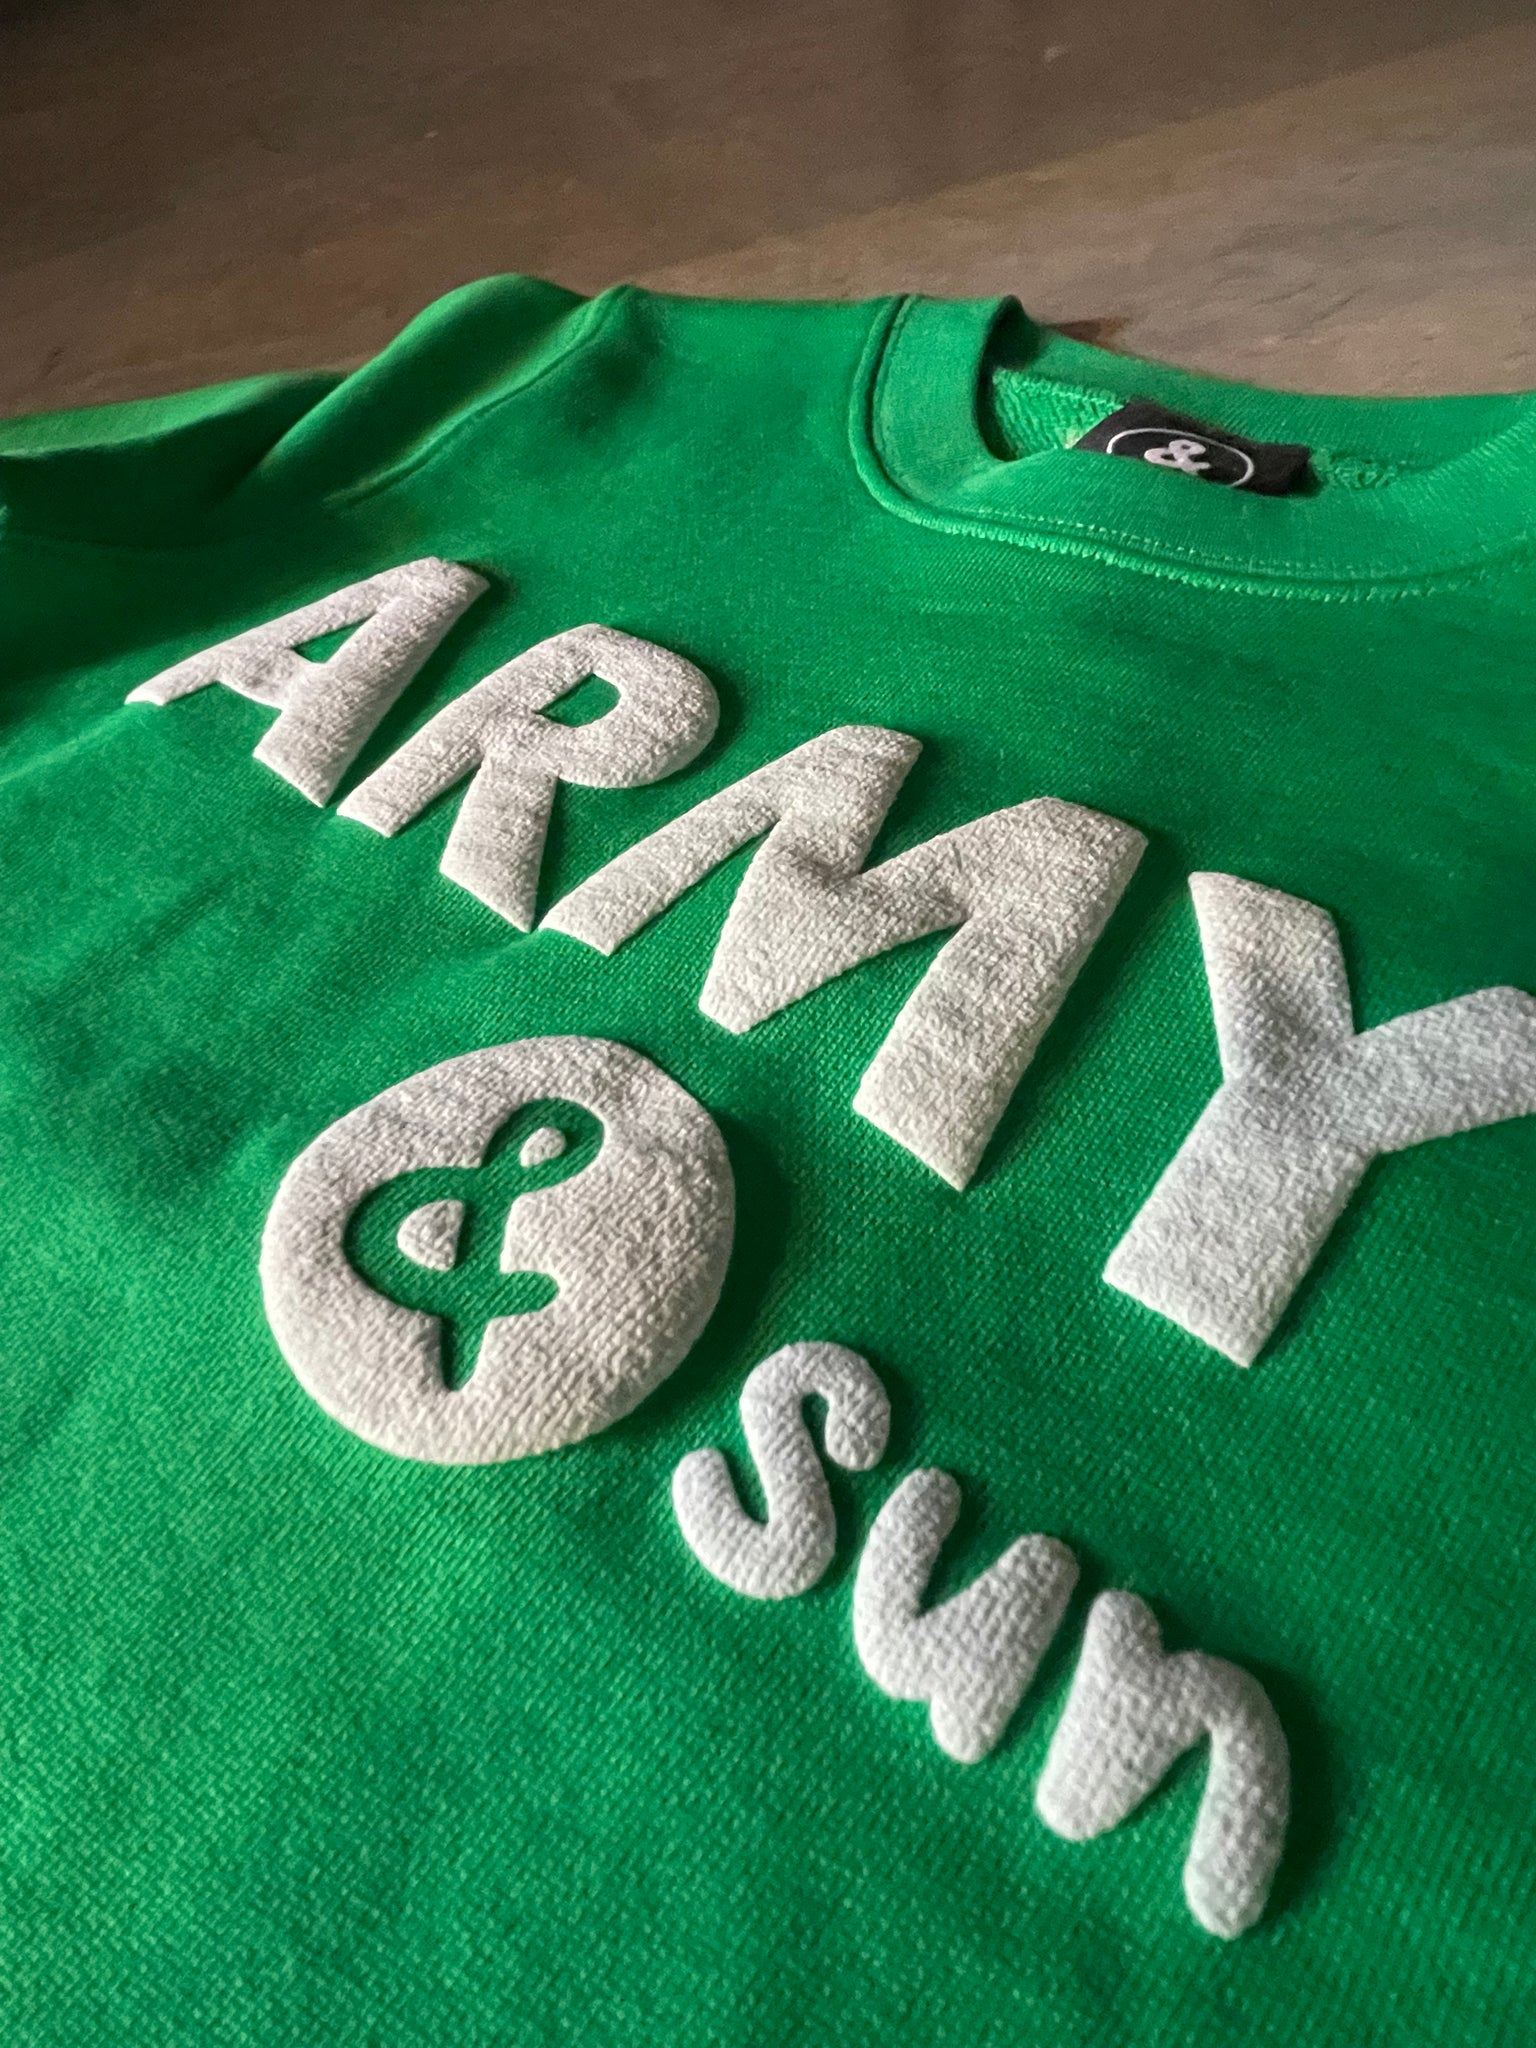 ARMY &sun スウェットトレーナー  ブライトグリーン × ホワイトロゴ